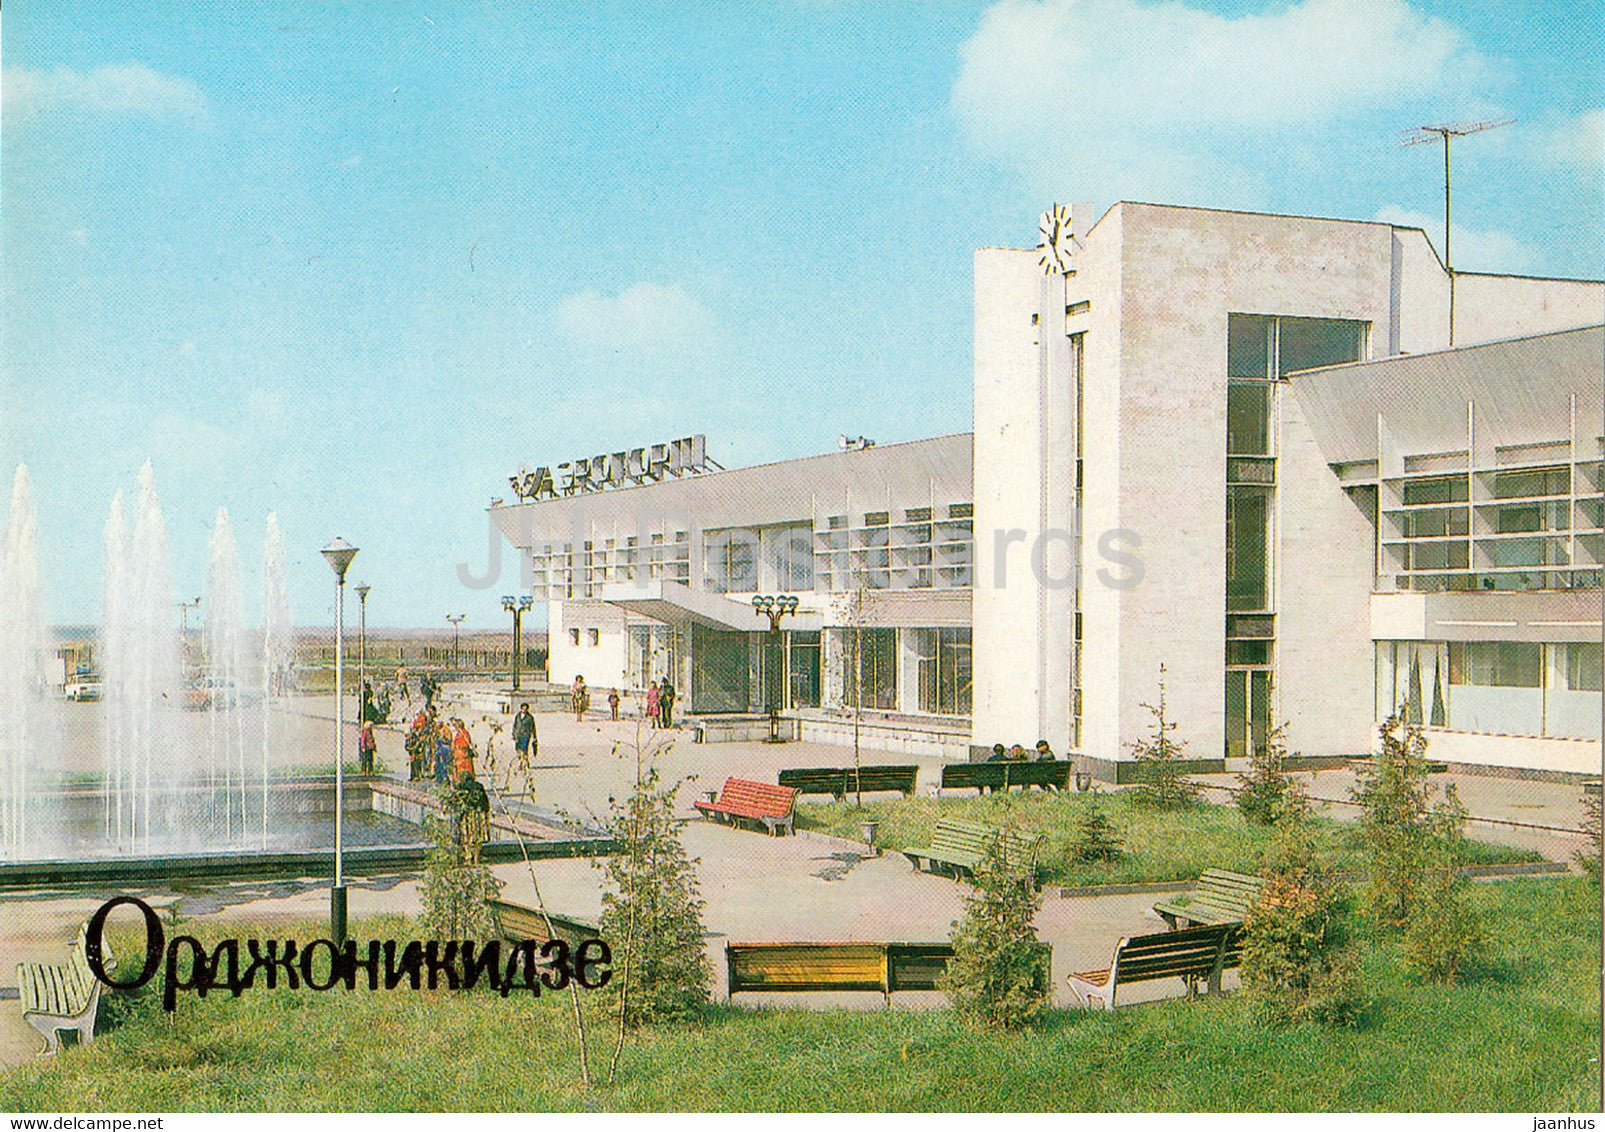 Vladikavkaz - Ordzhonikidze - airport - Ossetia - 1984 - Russia USSR - unused - JH Postcards